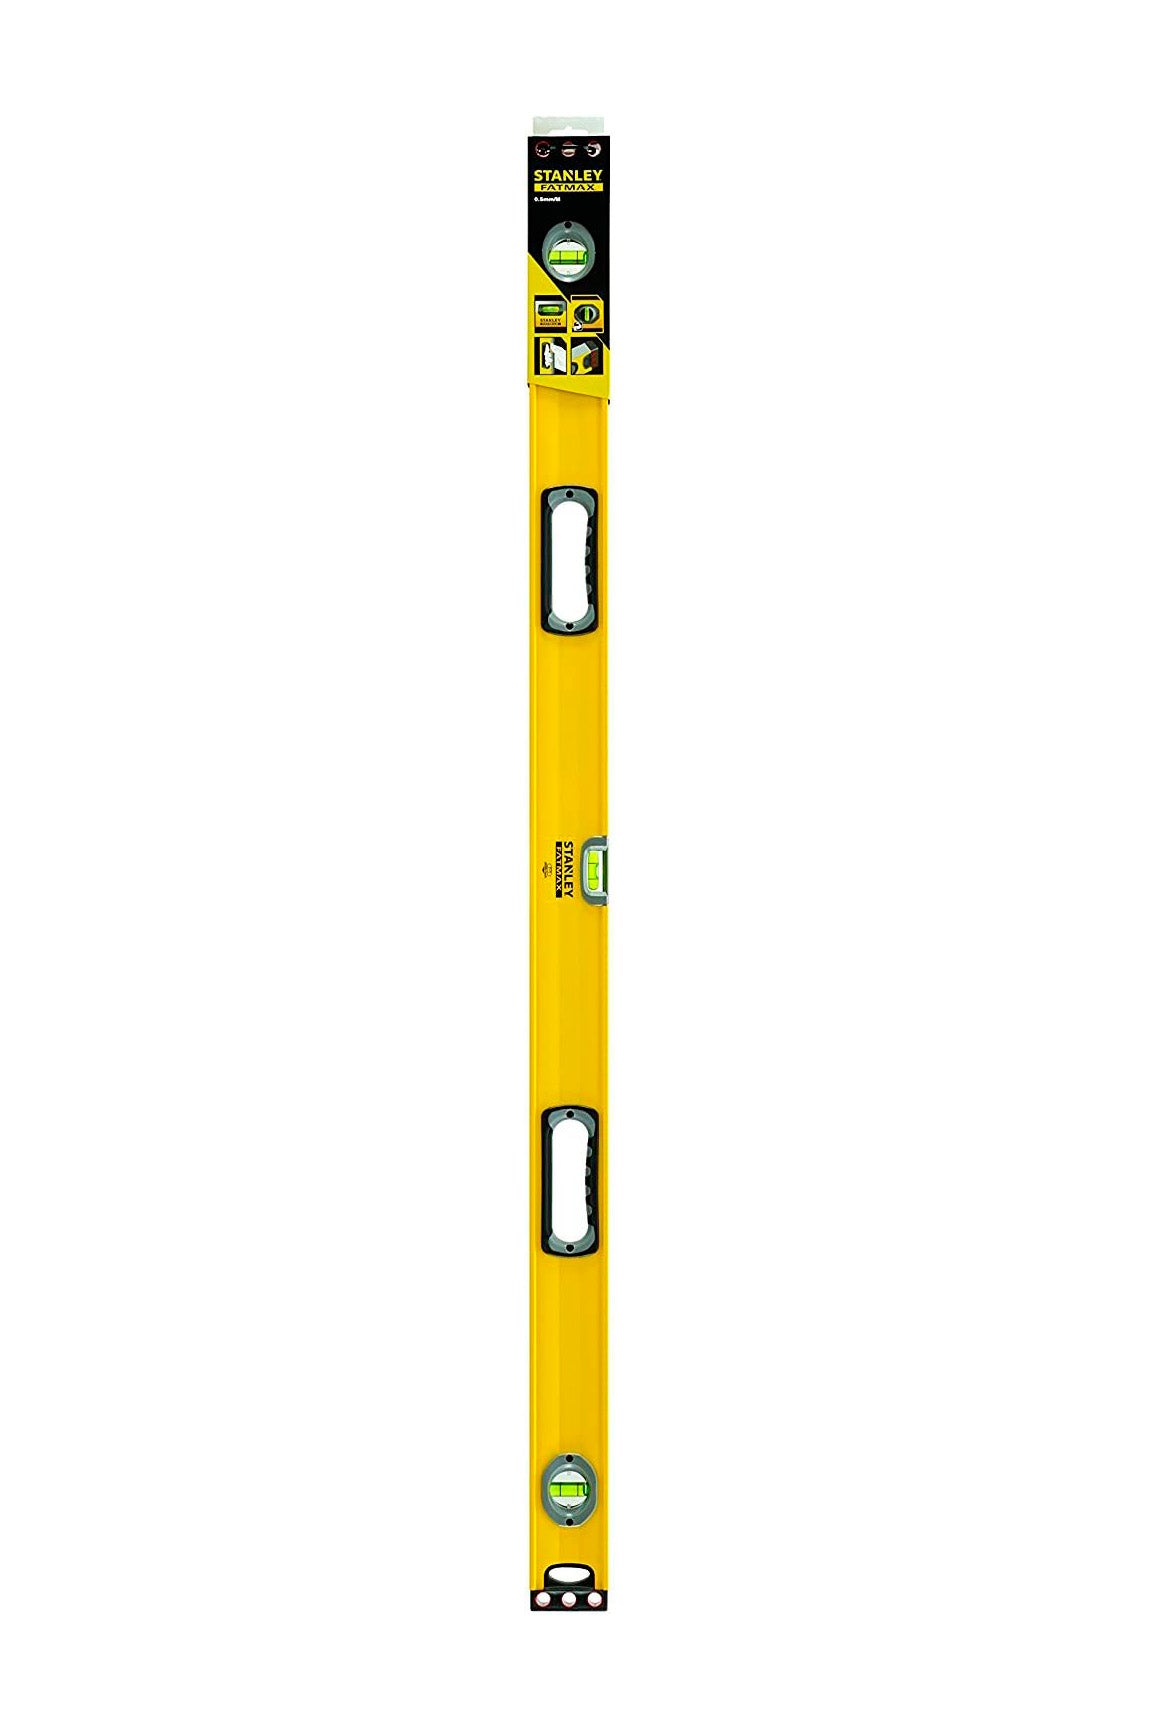 FatMax II Tubular Level 120cm Stanley 1-43-548